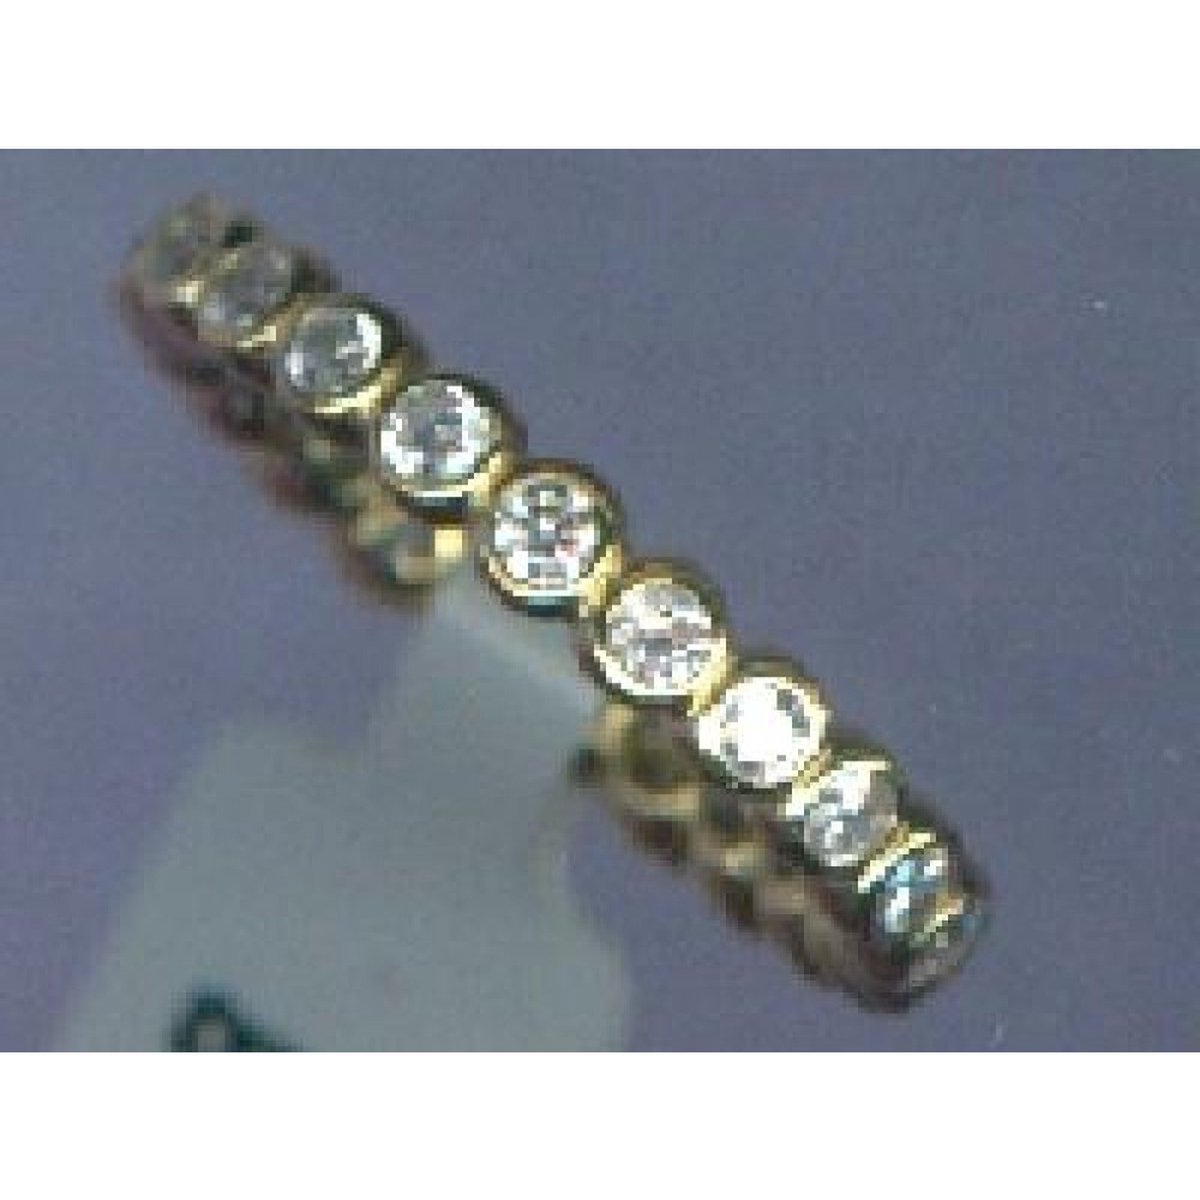 Twice As Nice Ring in 18kt verguld zilver, witte zirkonia 3 mm 56